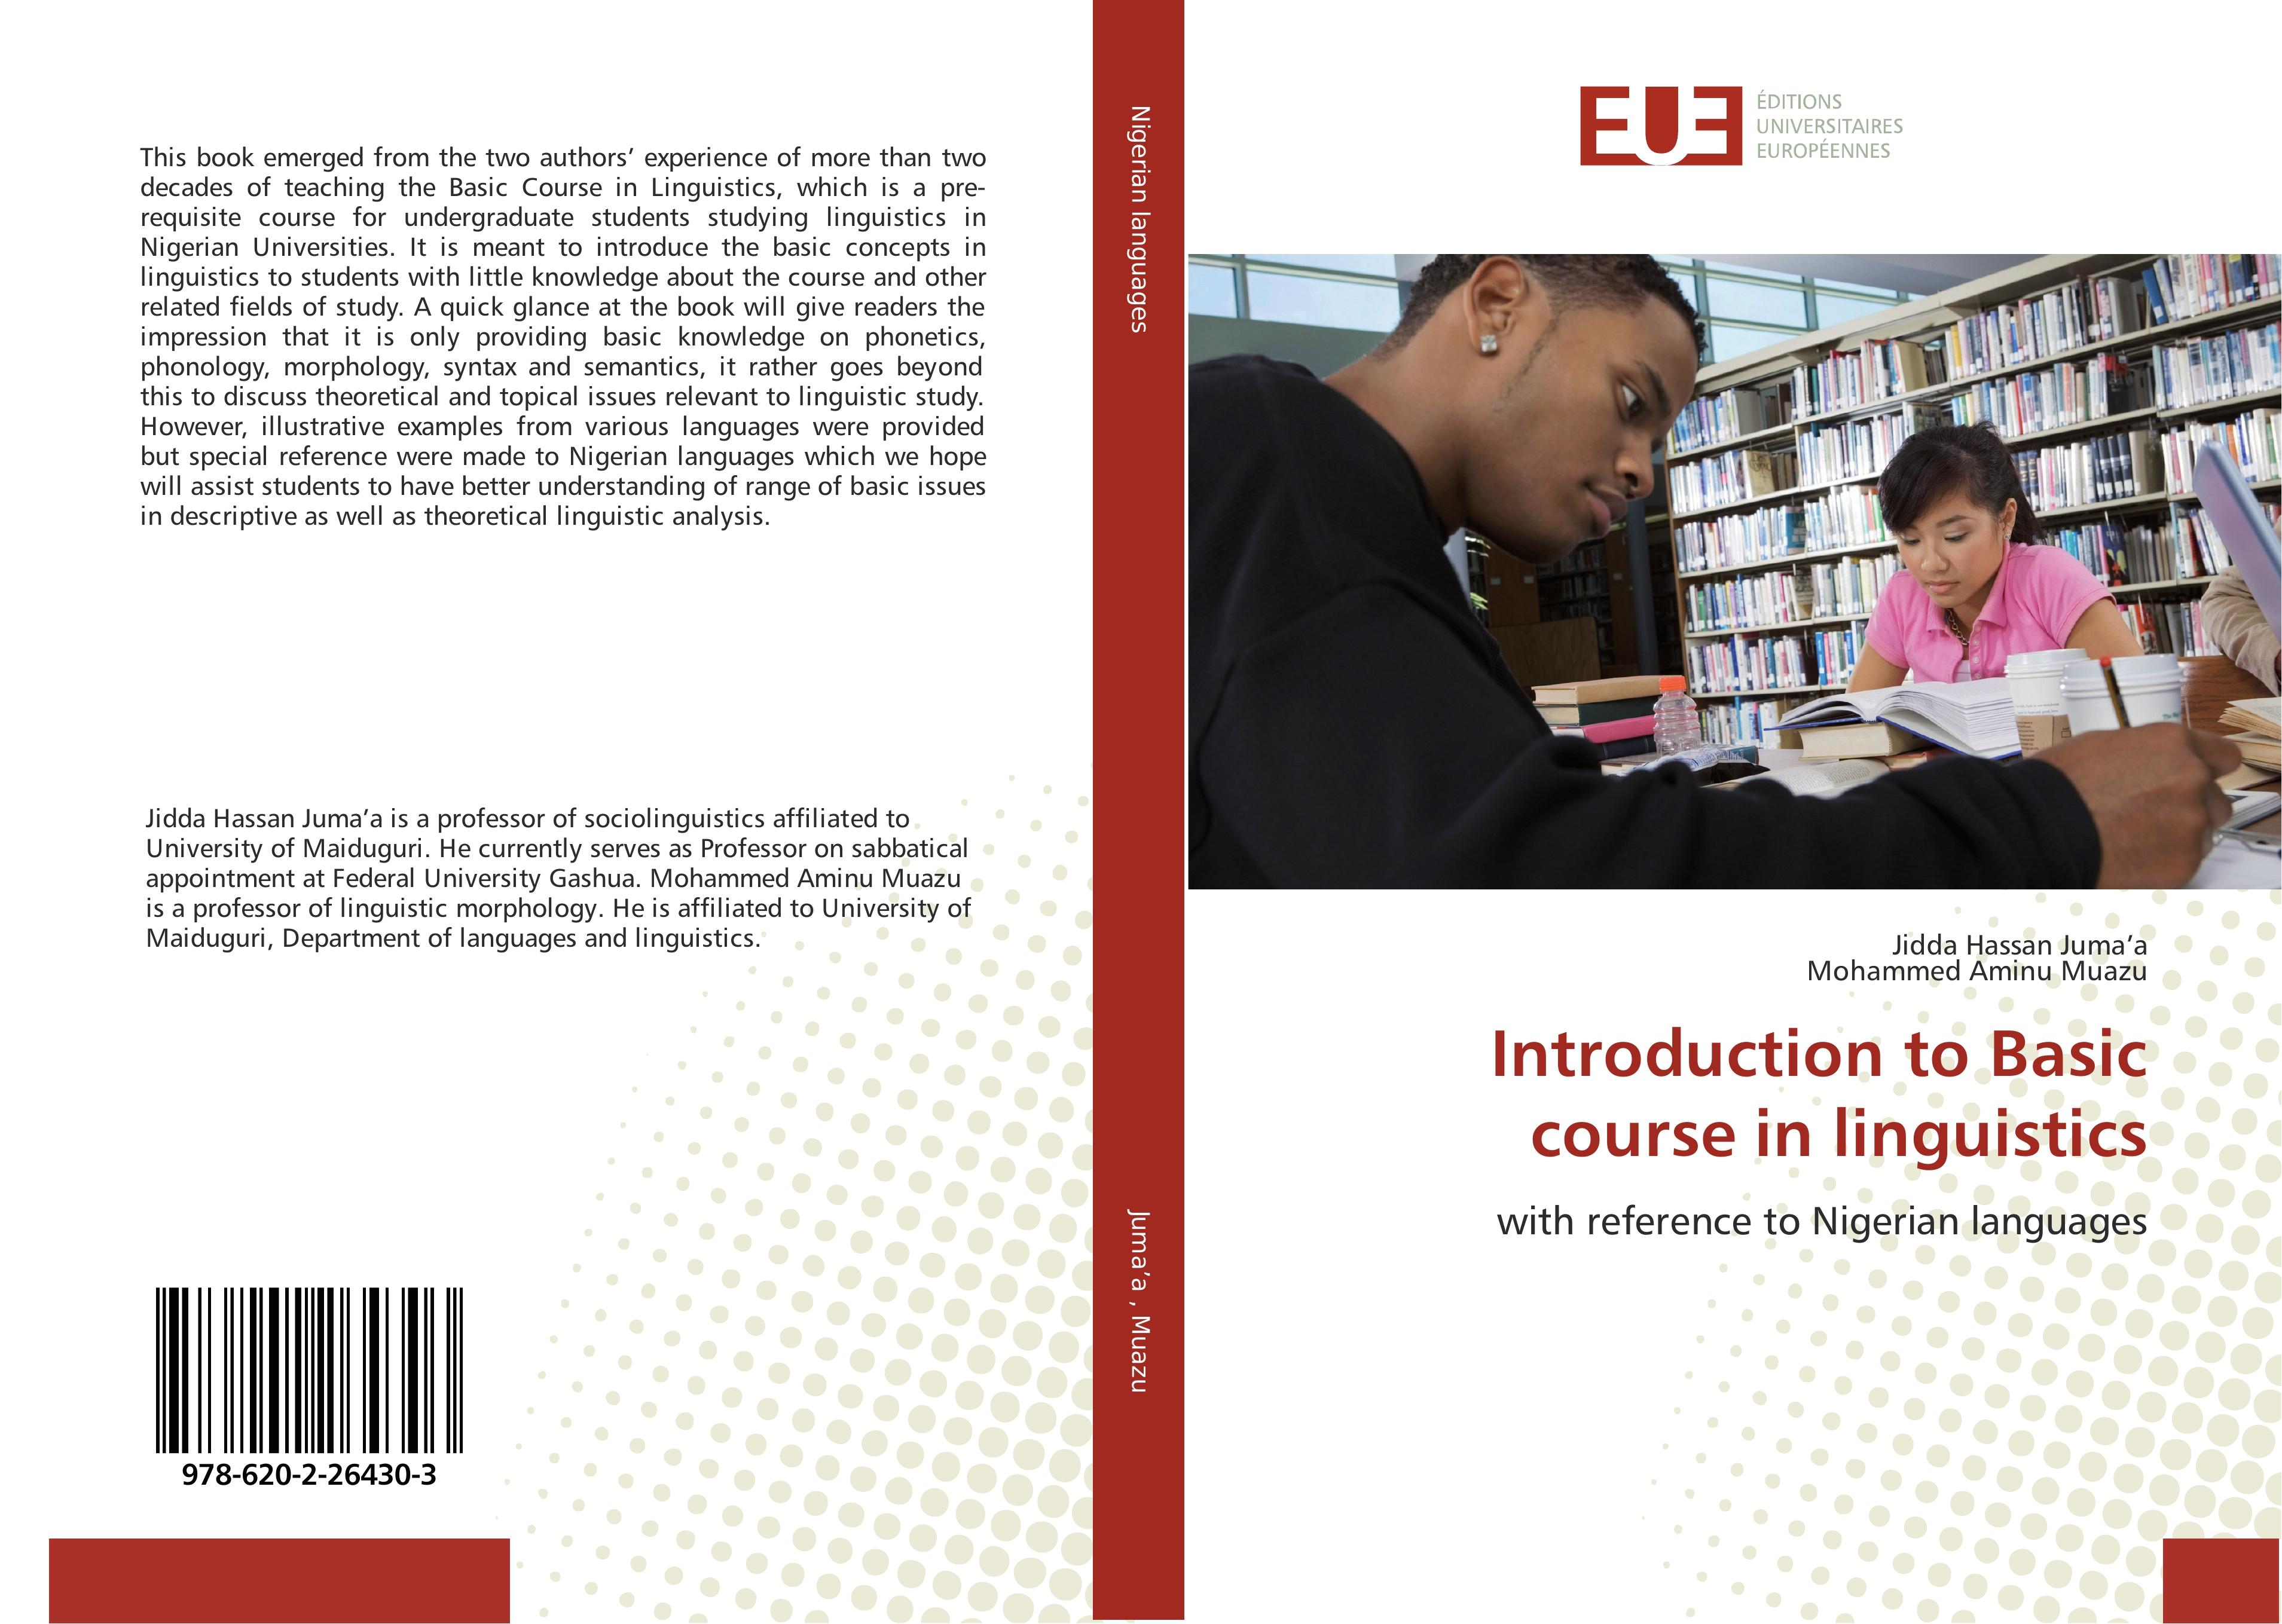 Introduction to Basic course in linguistics - Jidda Hassan Juma´a Mohammed Aminu Muazu